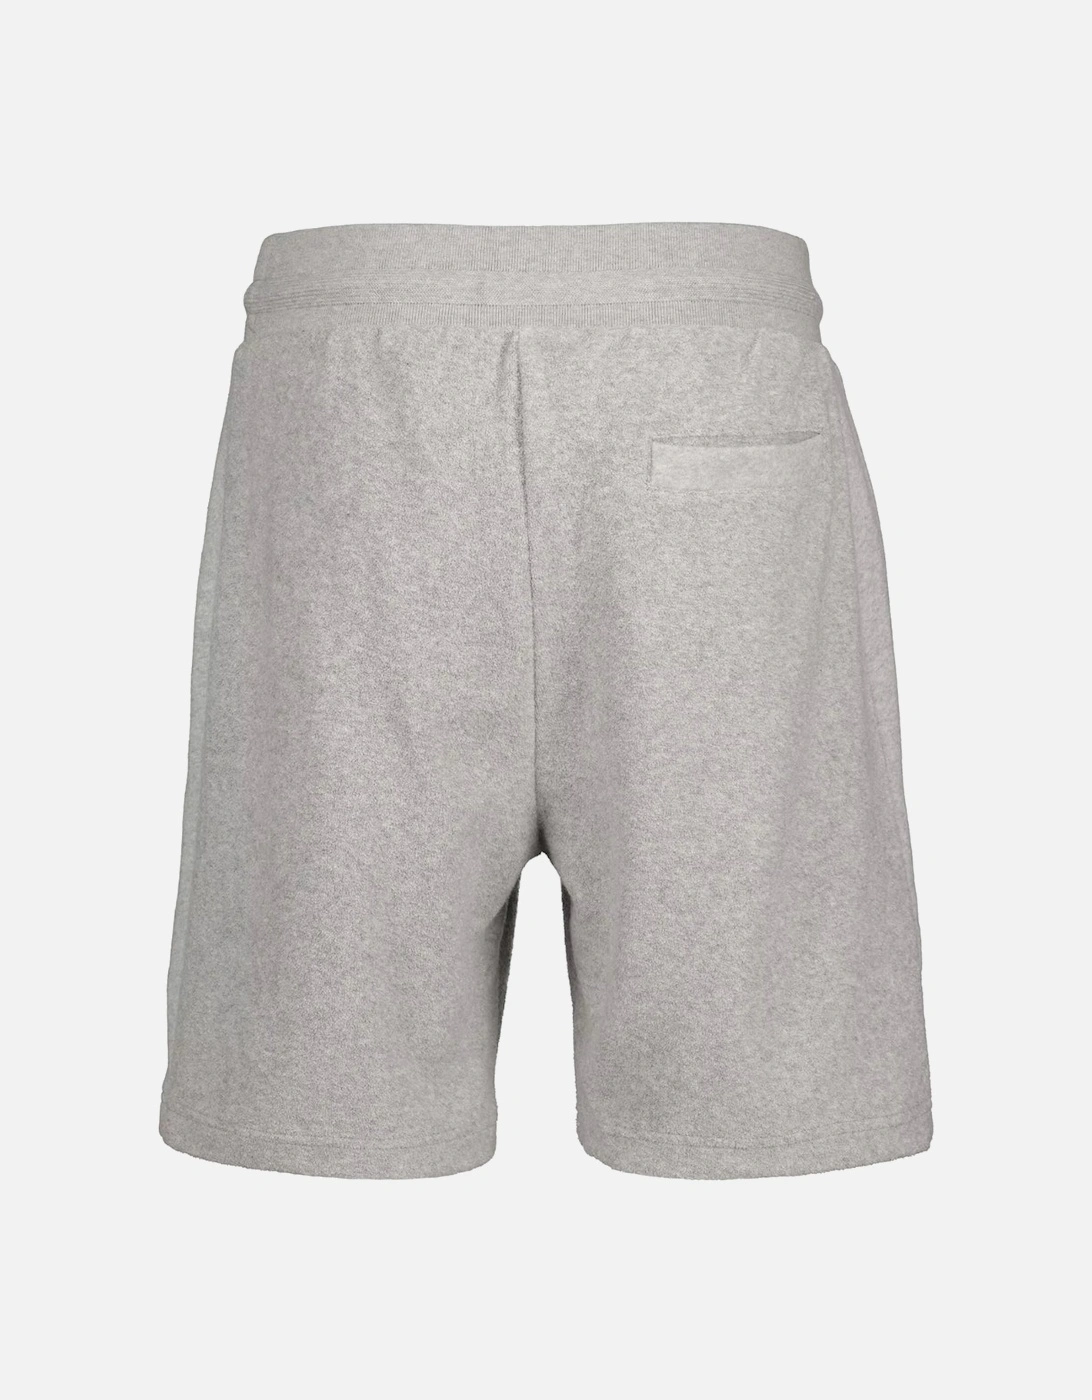 Trawler Grey Sweat Shorts